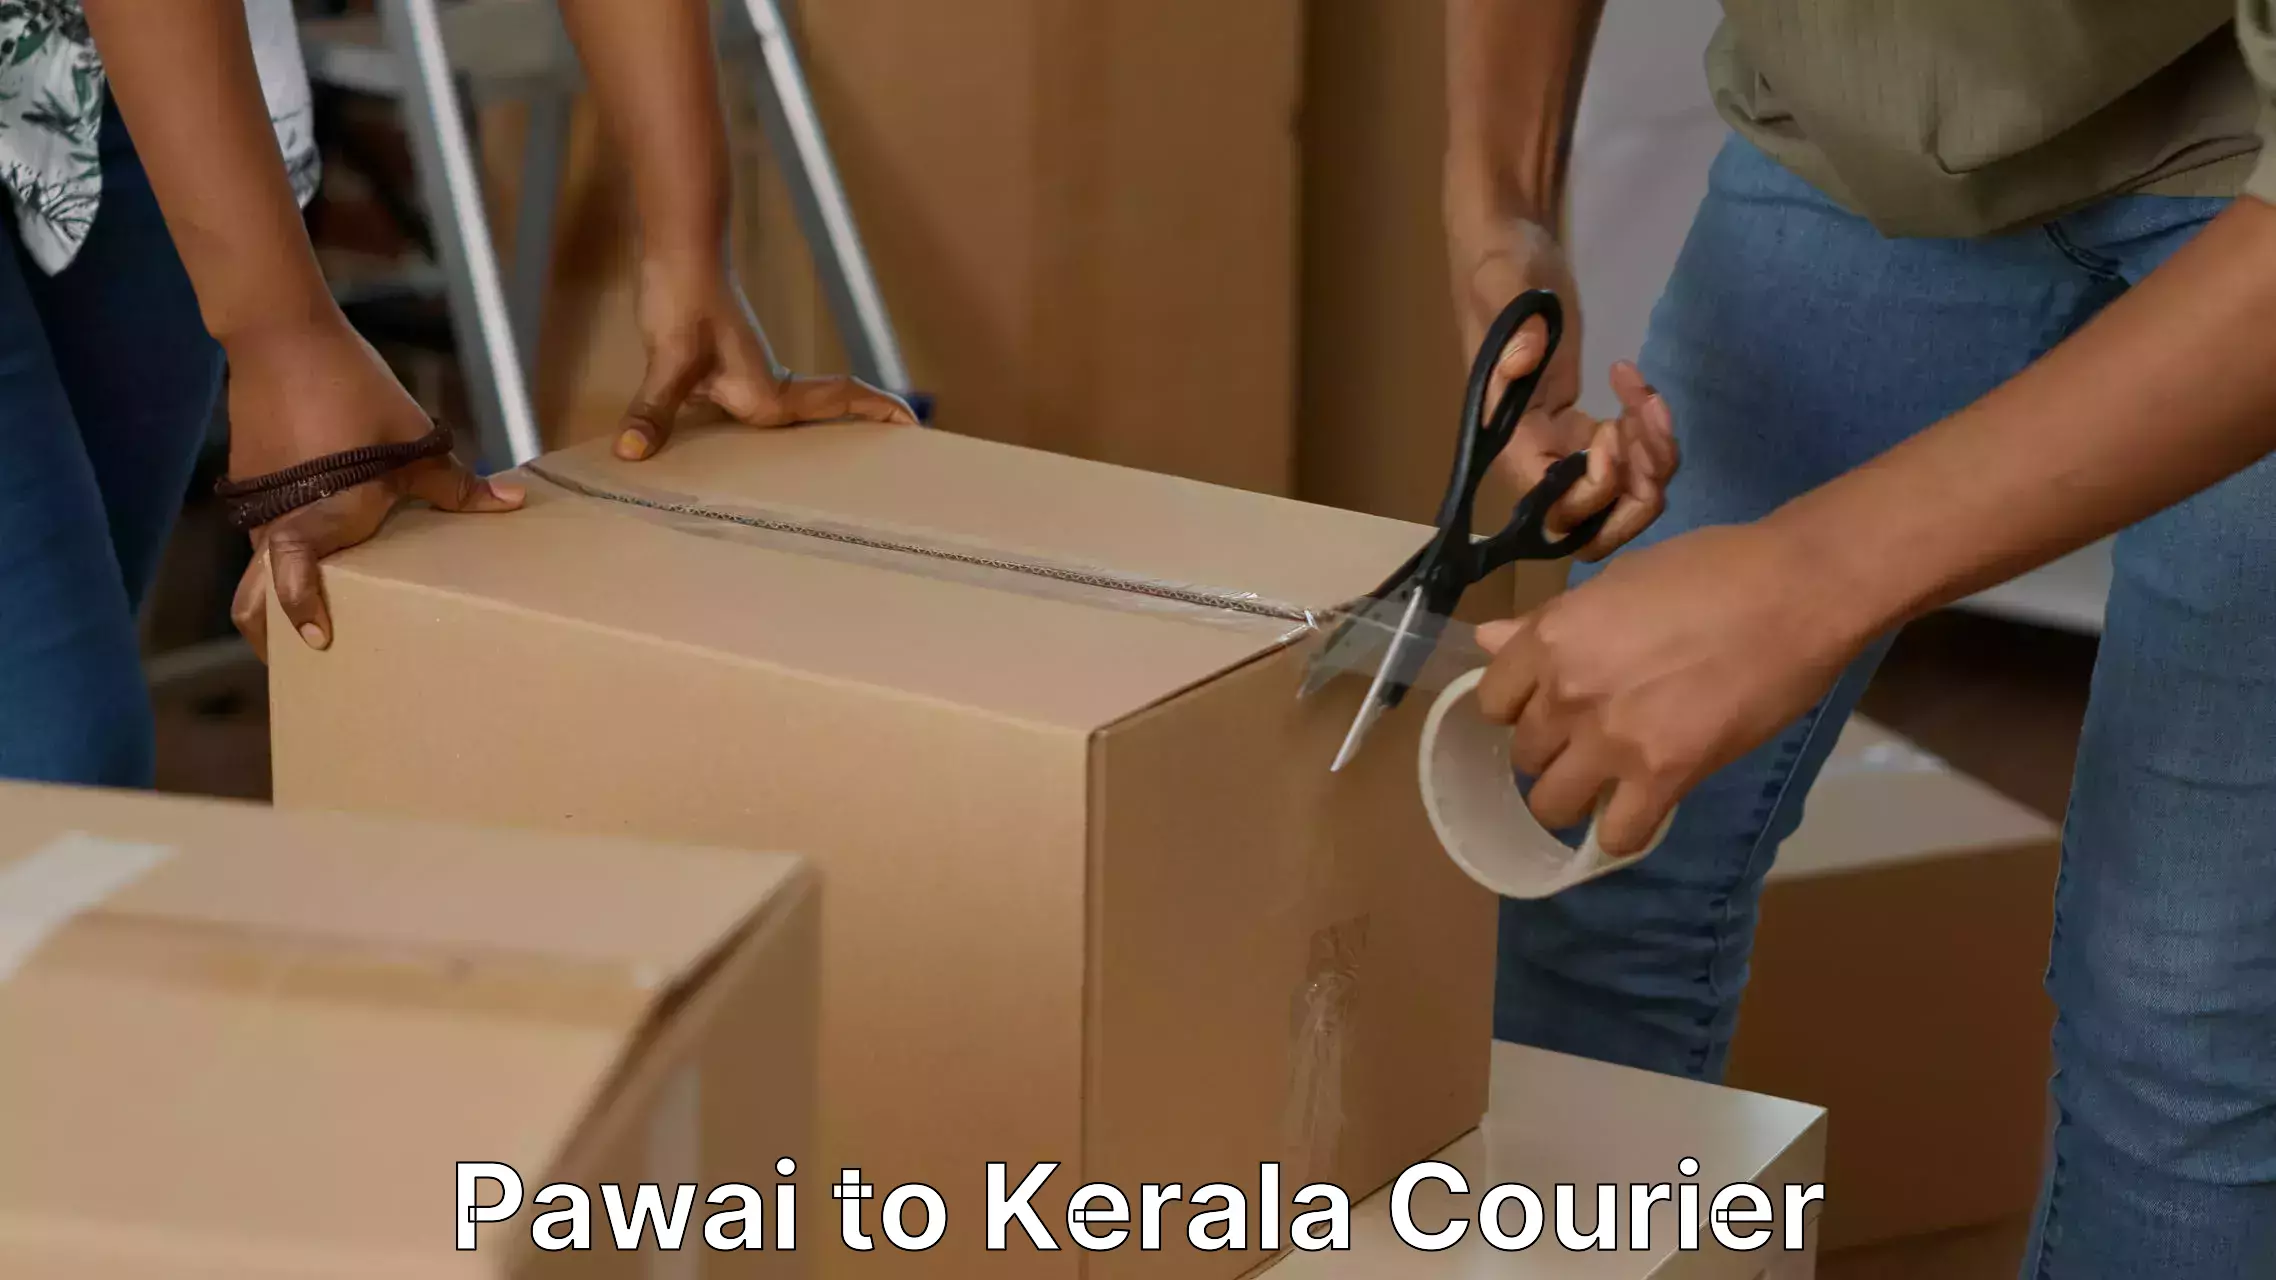 Furniture transport specialists Pawai to Kerala